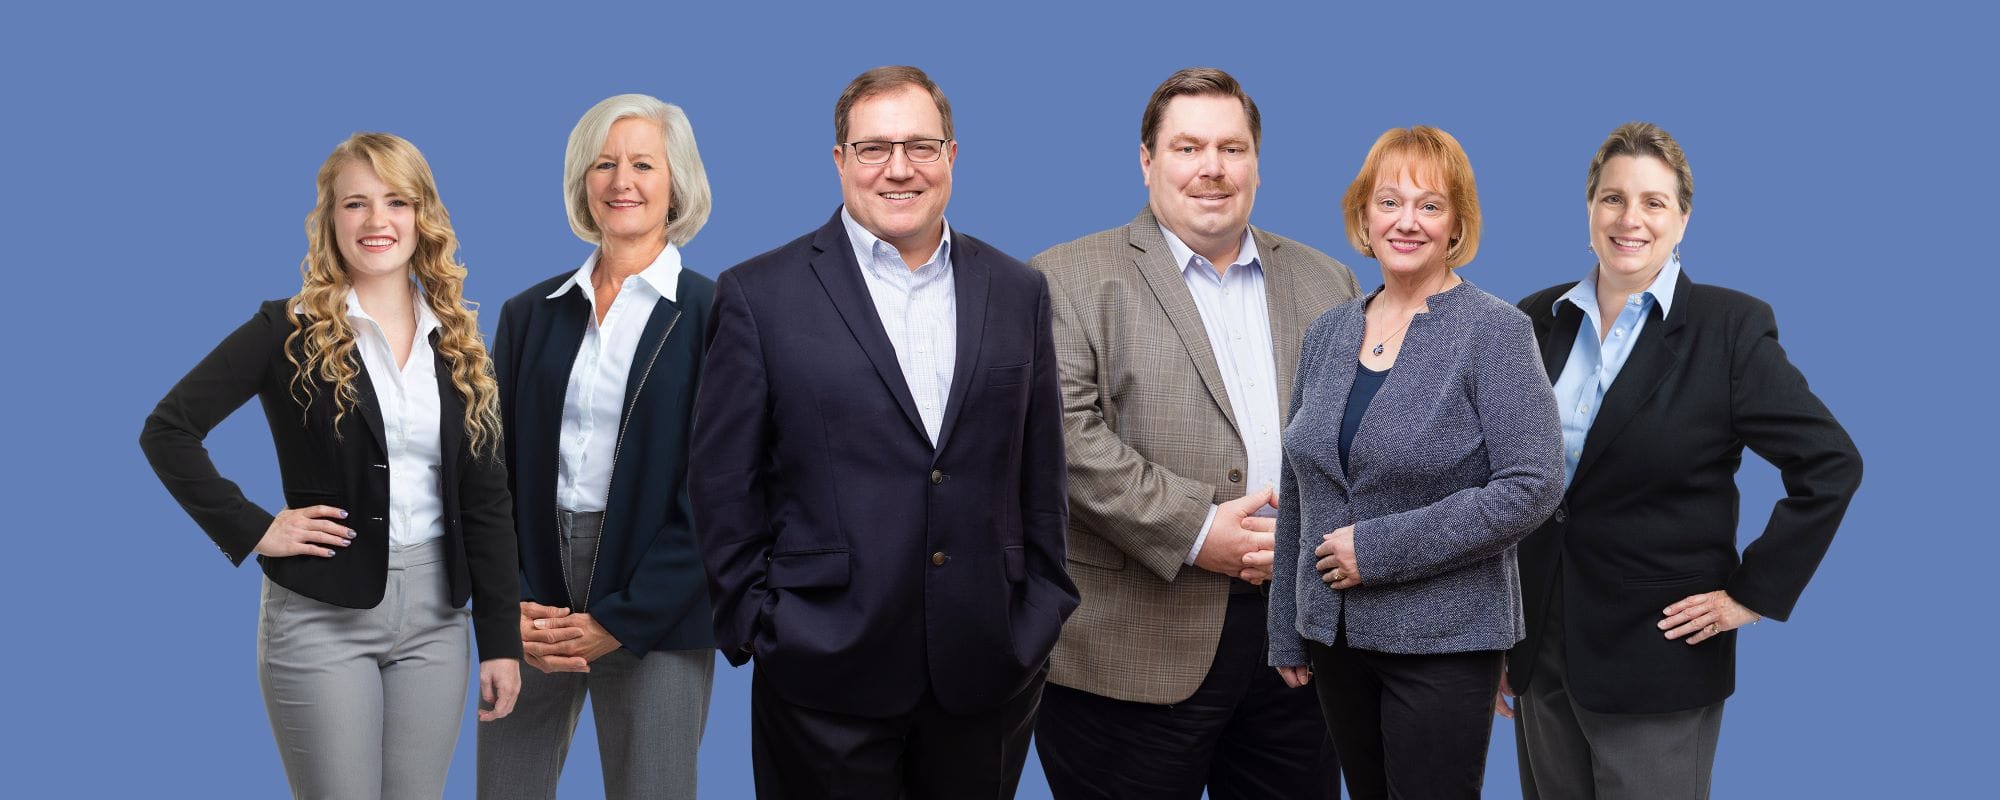 financial advisors team photo on blue background